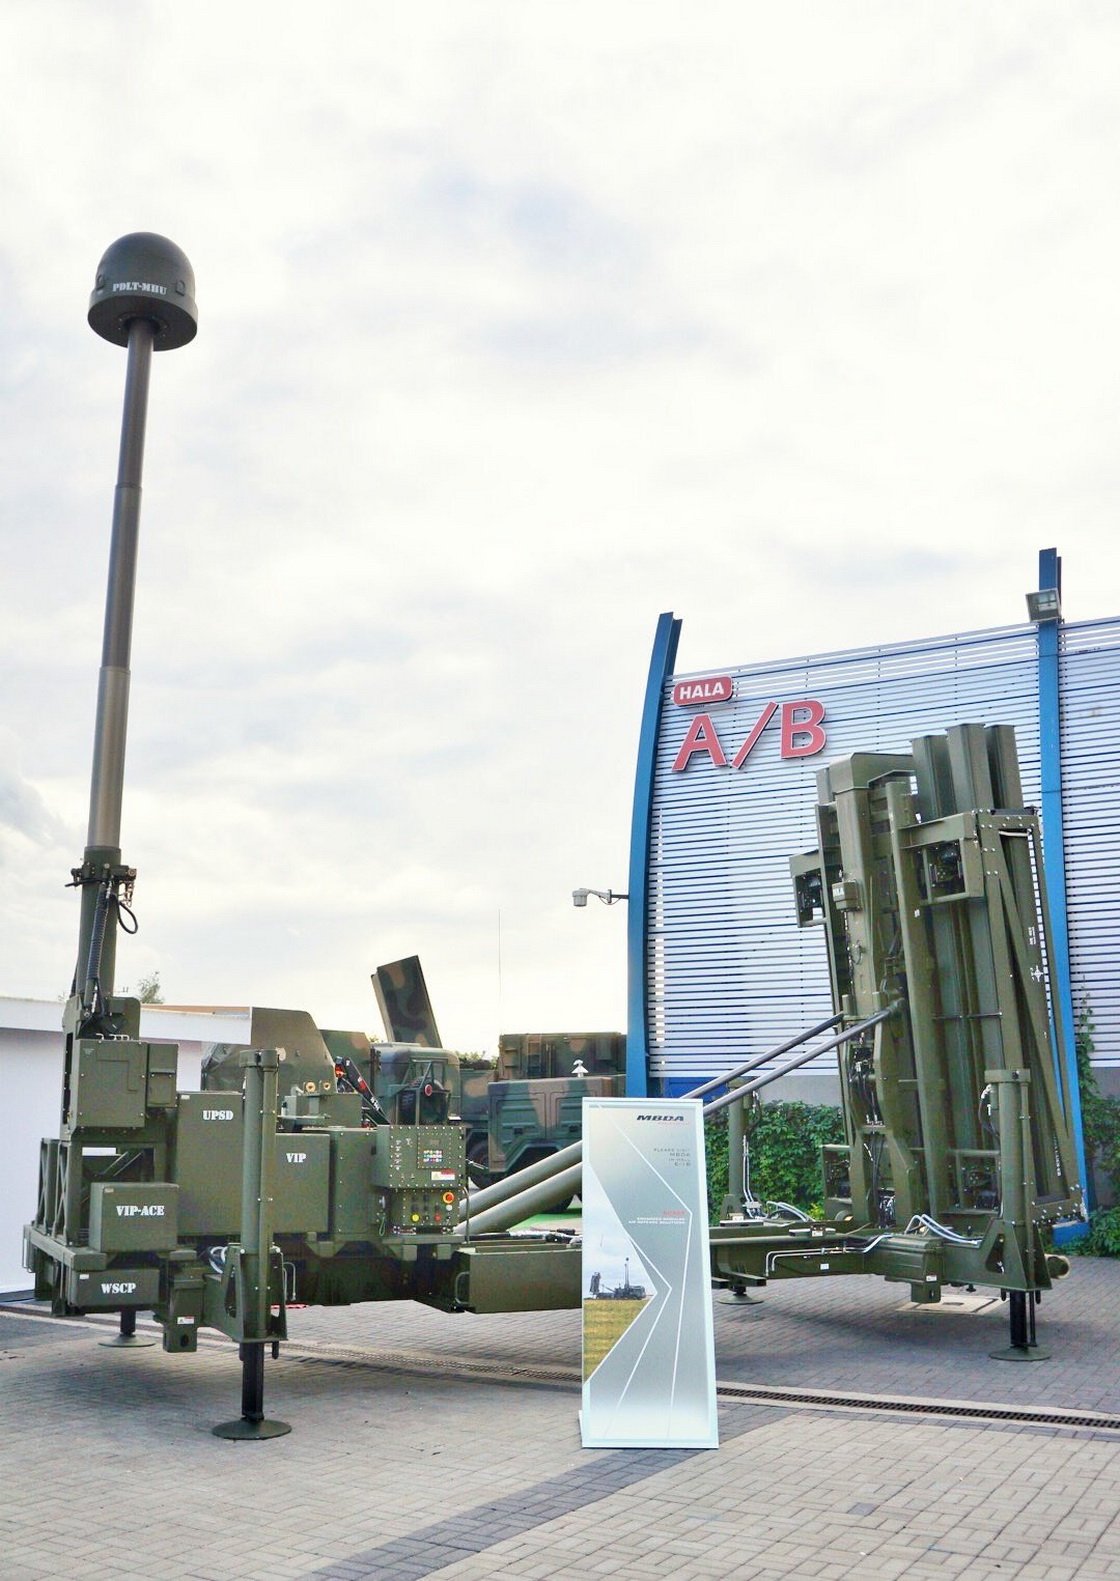 Common Anti Air Modular Missile (CAMM)